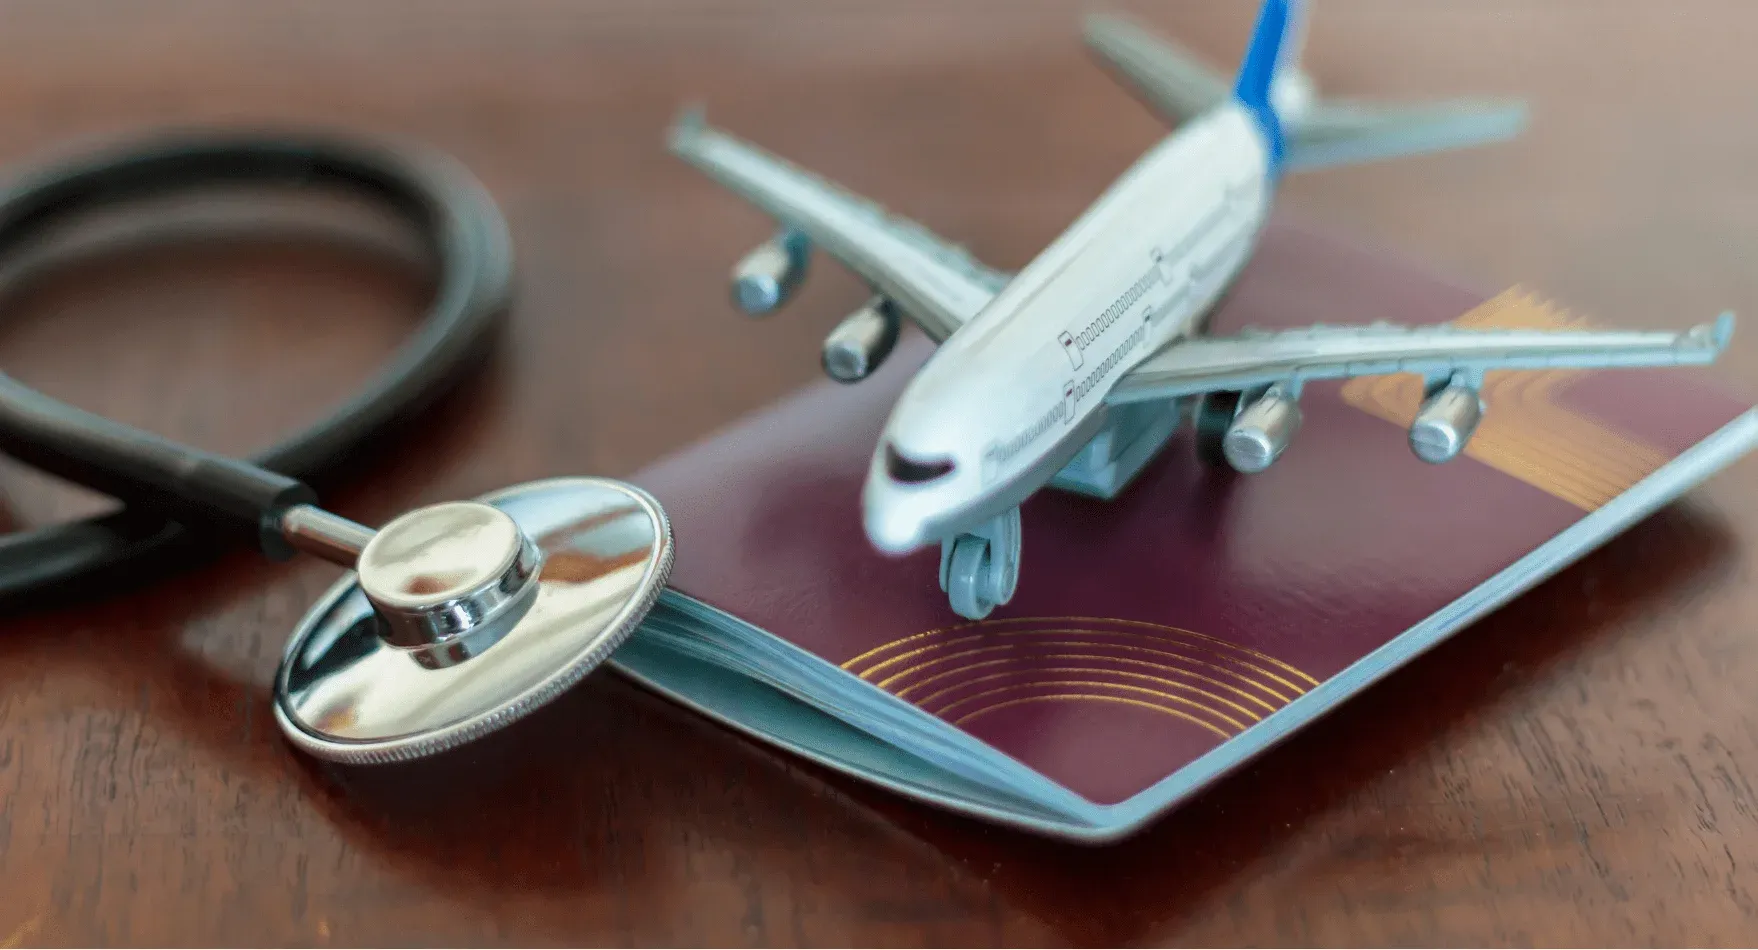 Passport, airplane model, and stethoscope